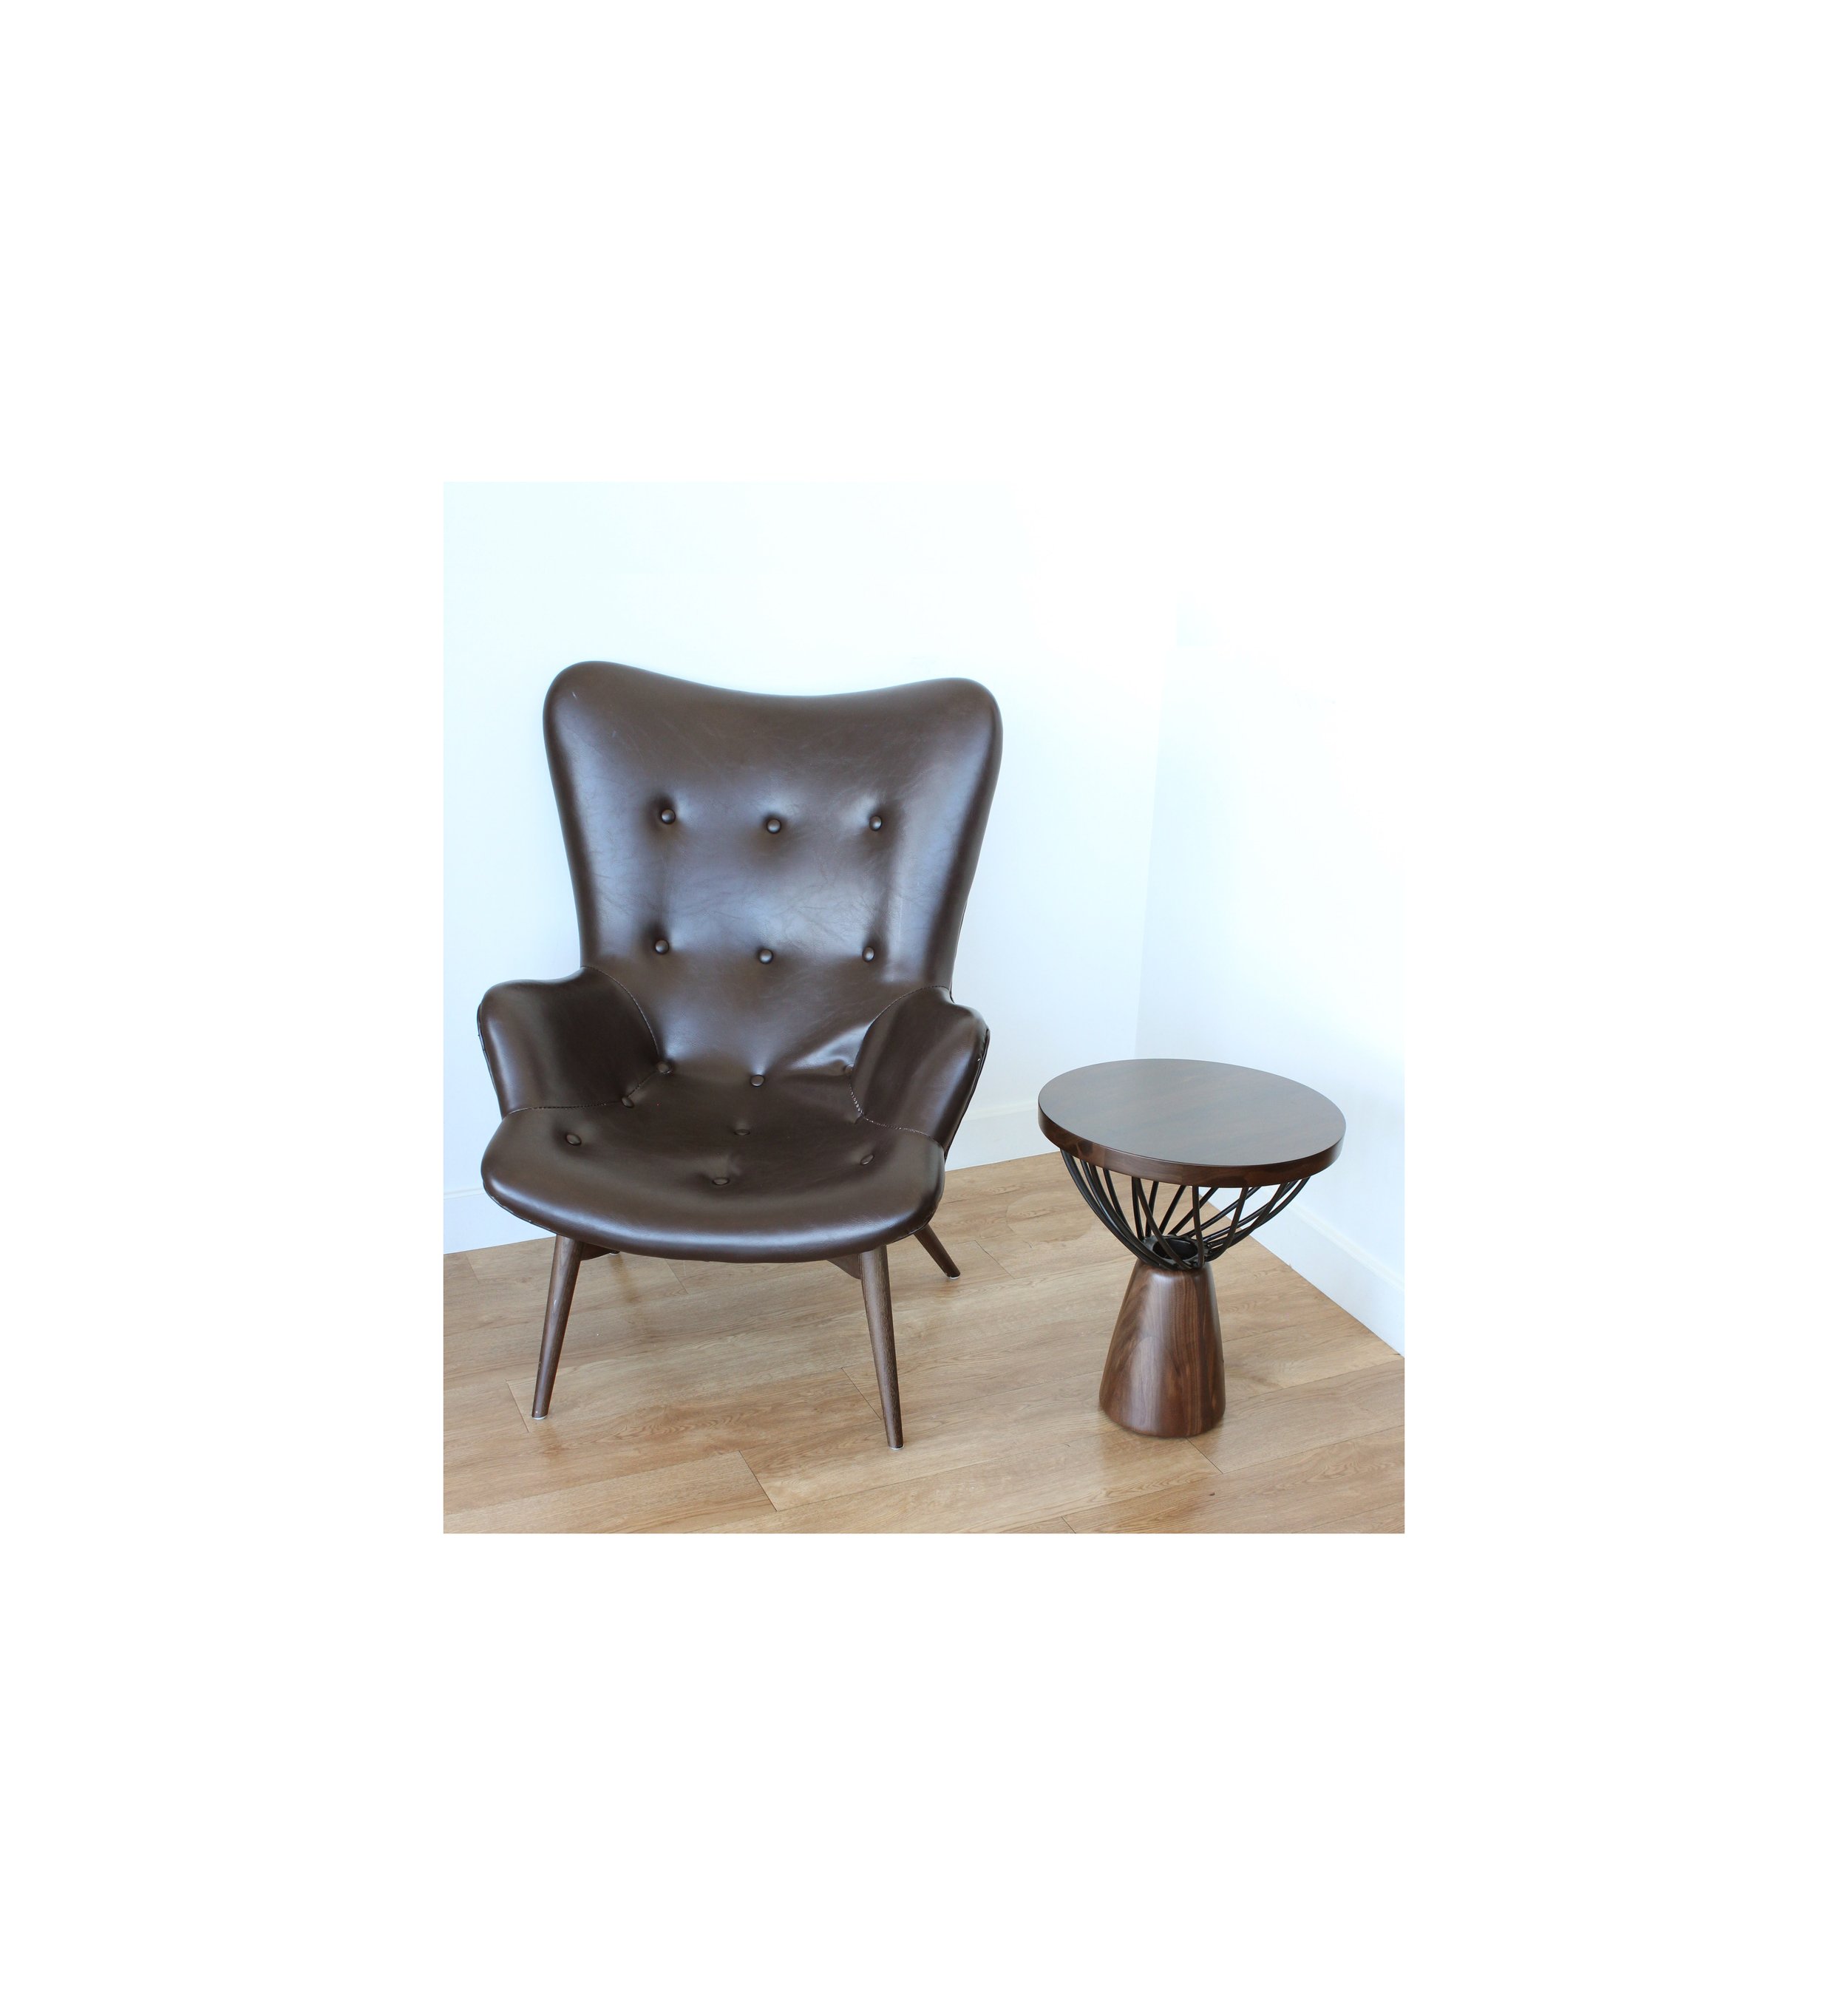 1_Chair&Table.jpg